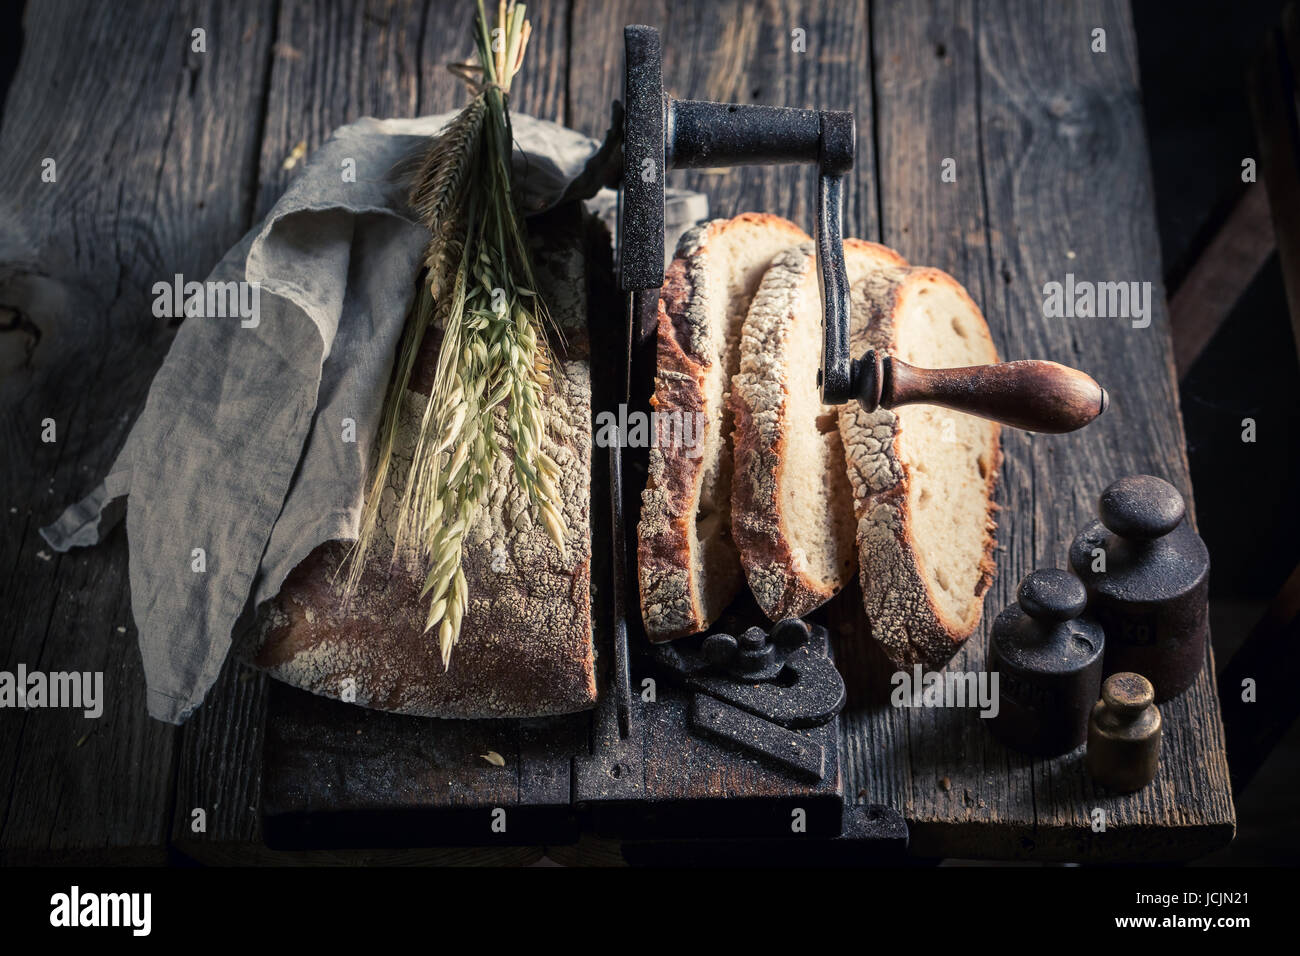 https://c8.alamy.com/comp/JCJN21/fresh-loaf-of-bread-on-old-slicer-JCJN21.jpg